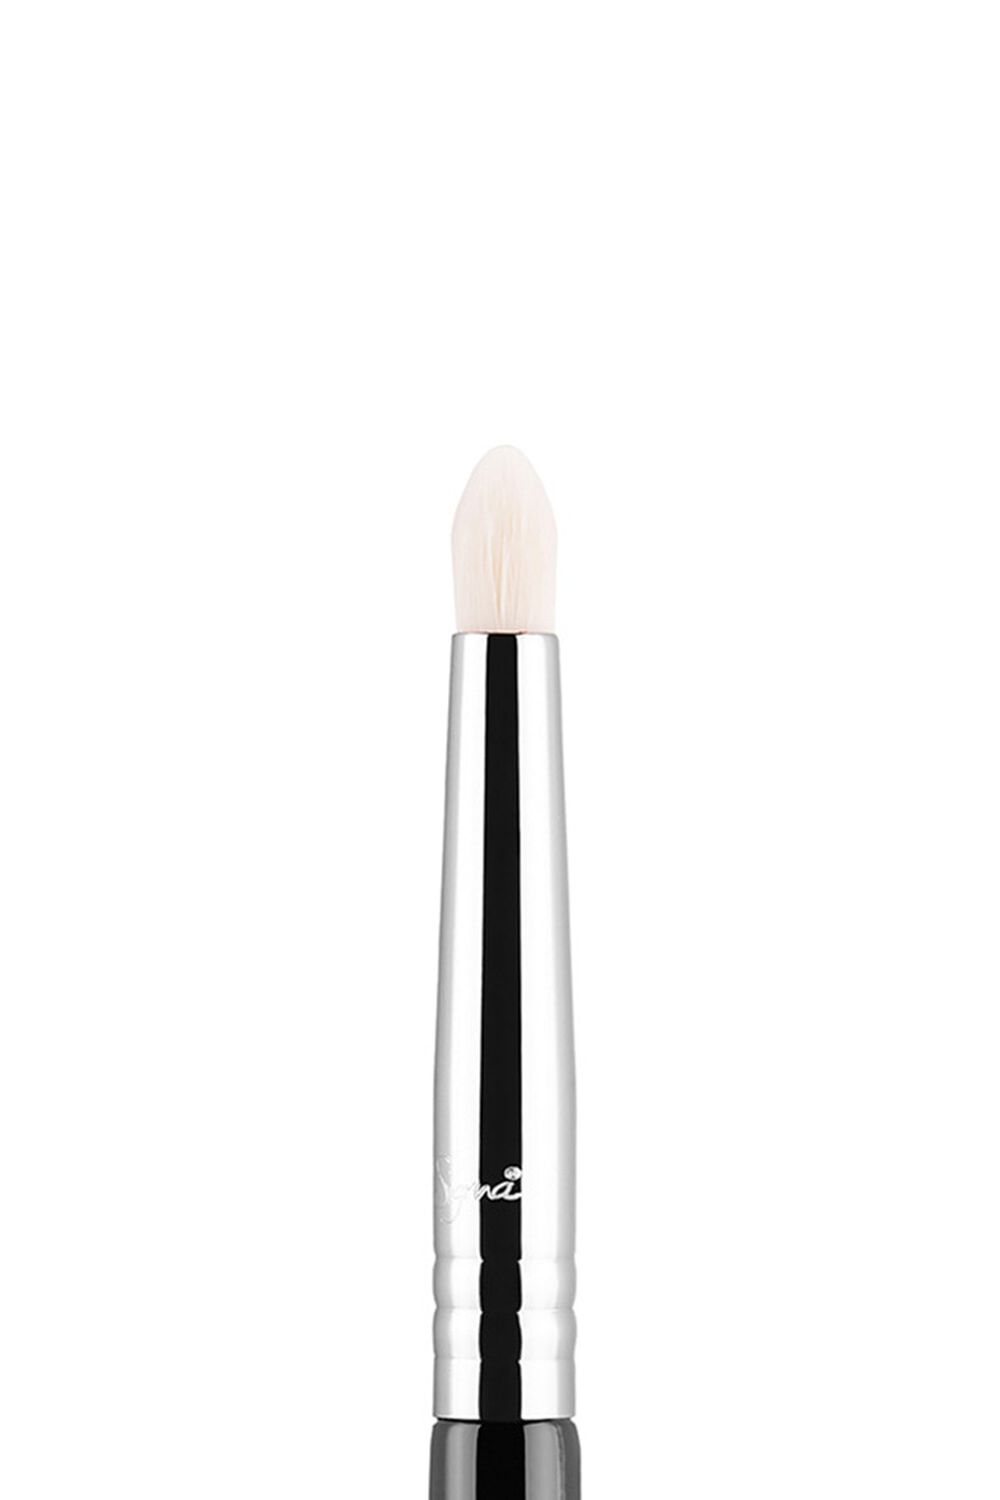 Sigma Beauty E30 – Pencil Brush, image 2